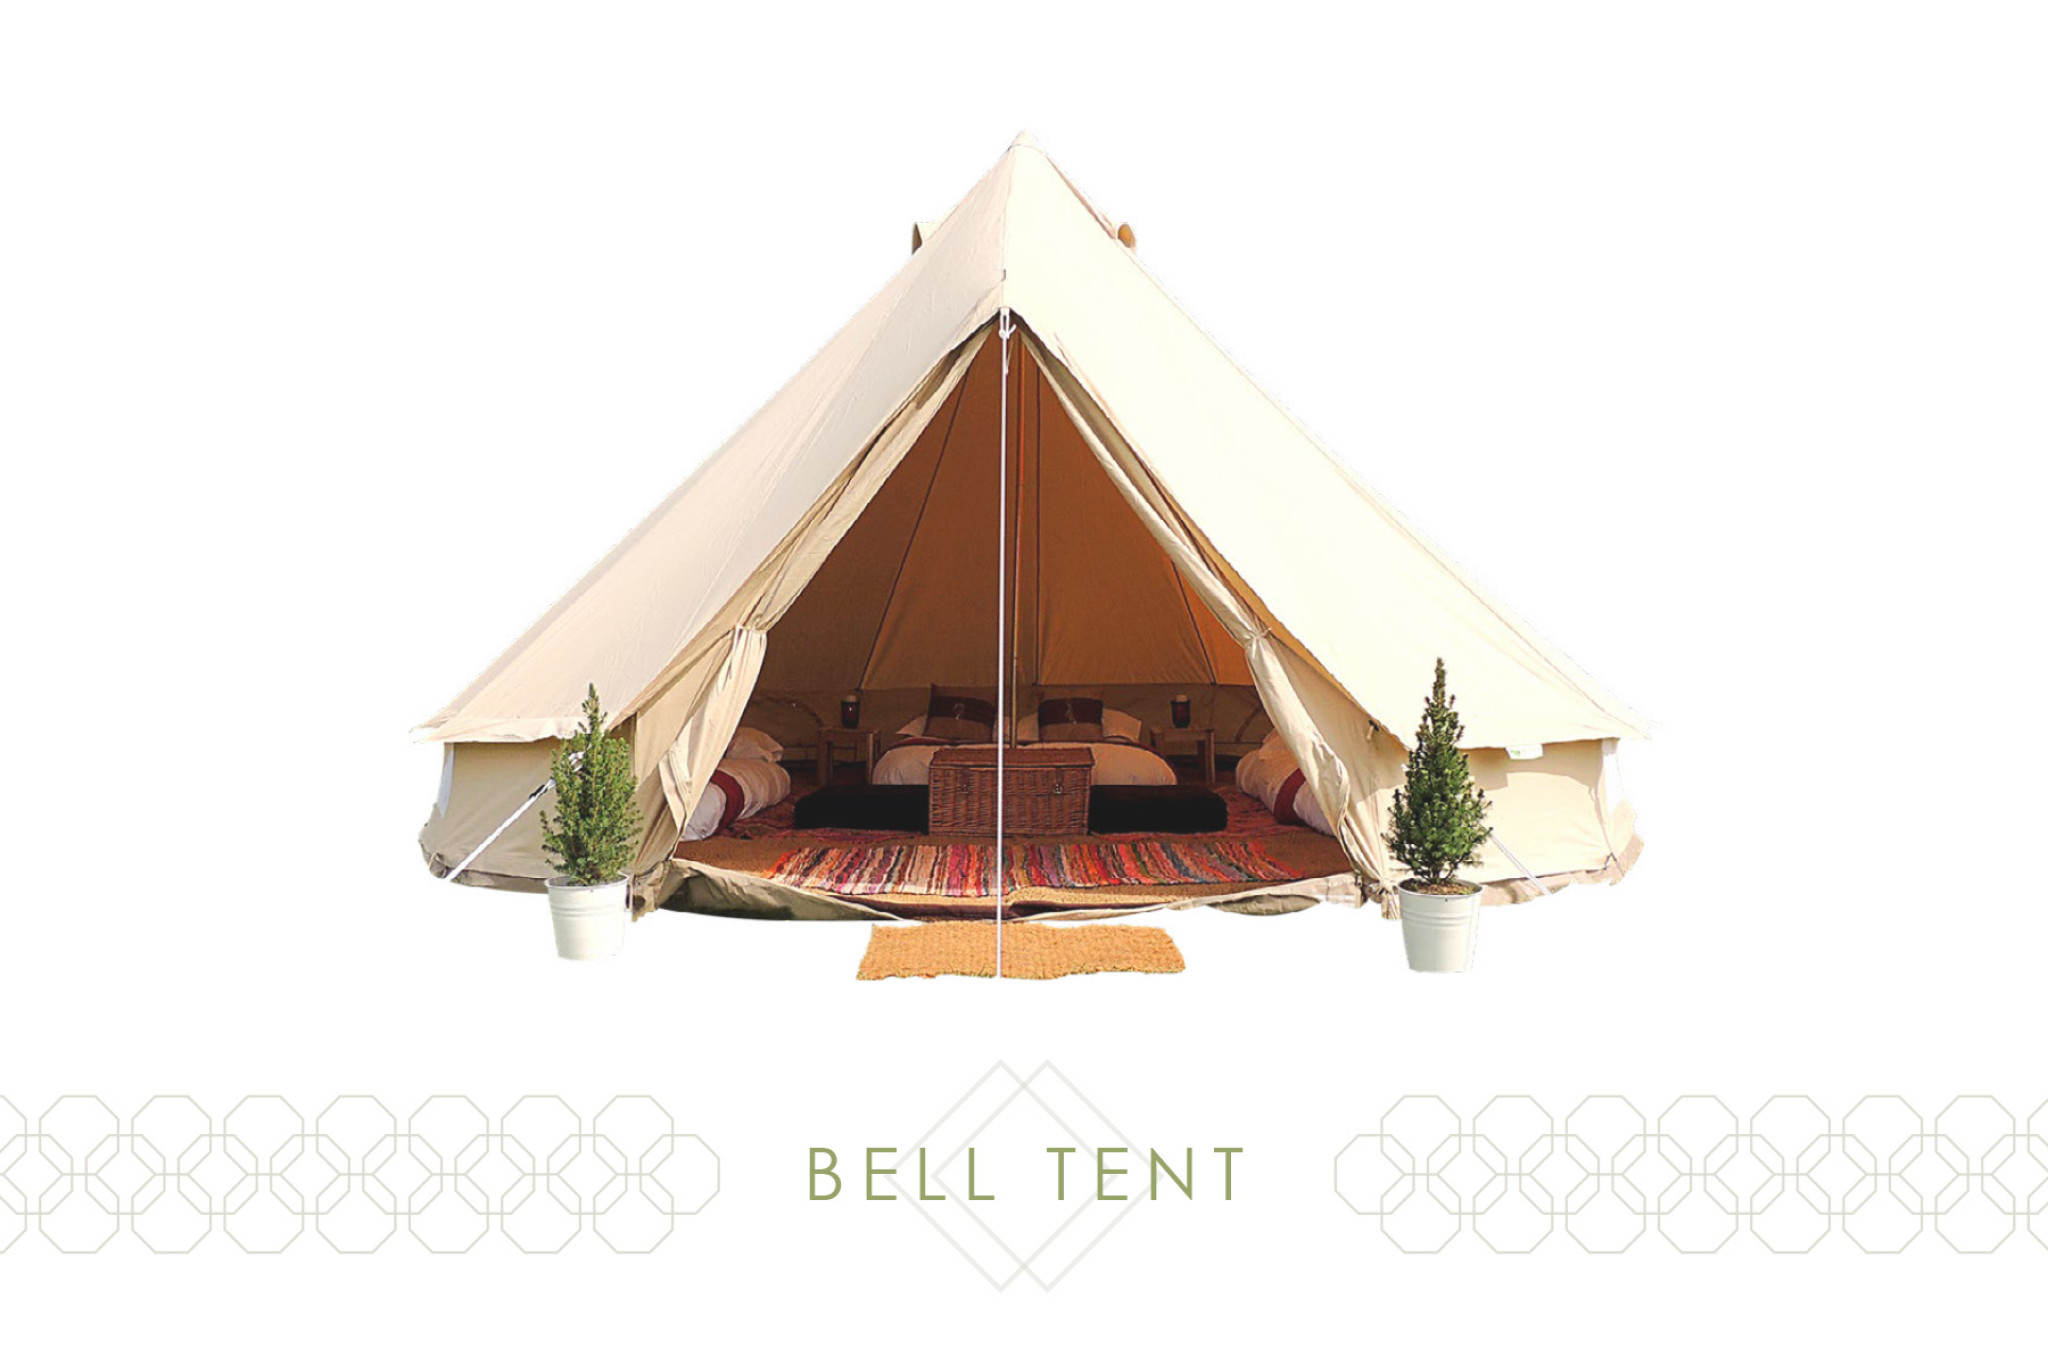 Bell Tent - WP Website.jpg